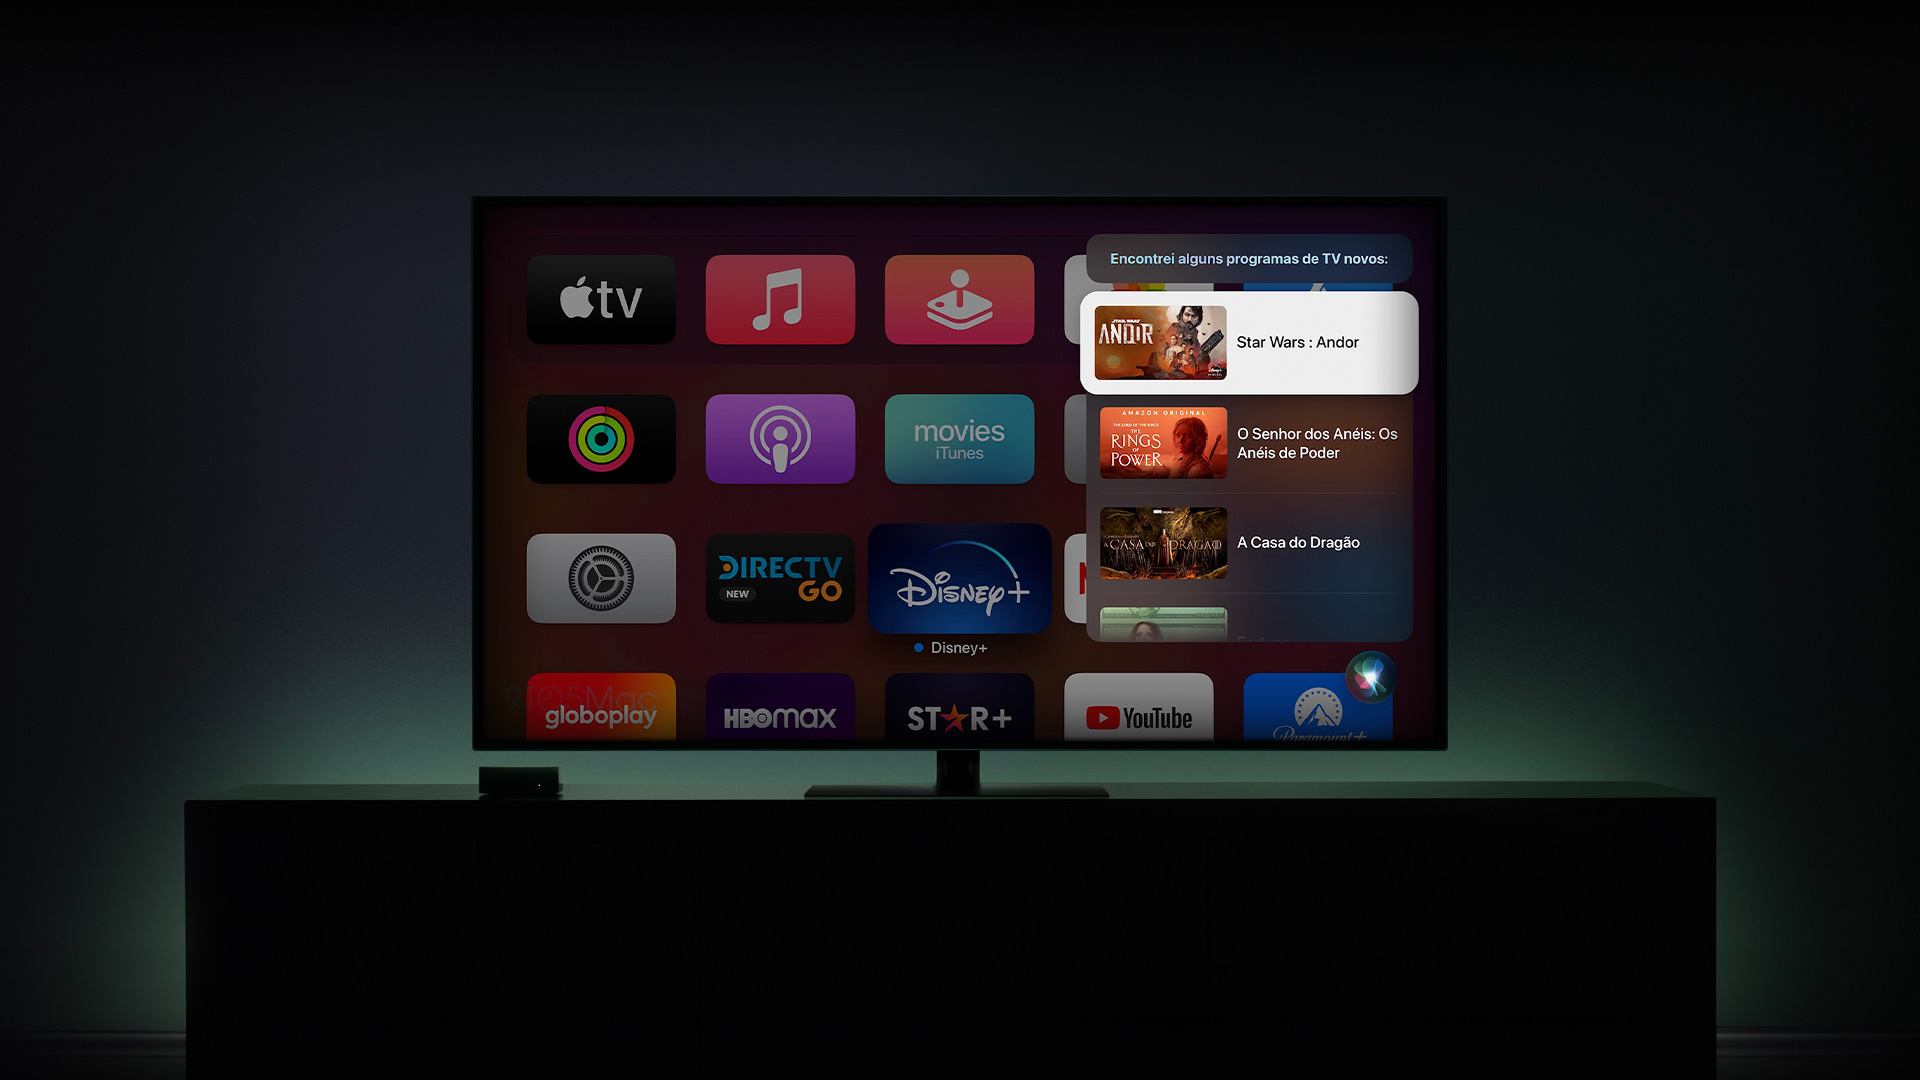 ganske enkelt tag Diktat Here's a look at the new Siri interface on Apple TV